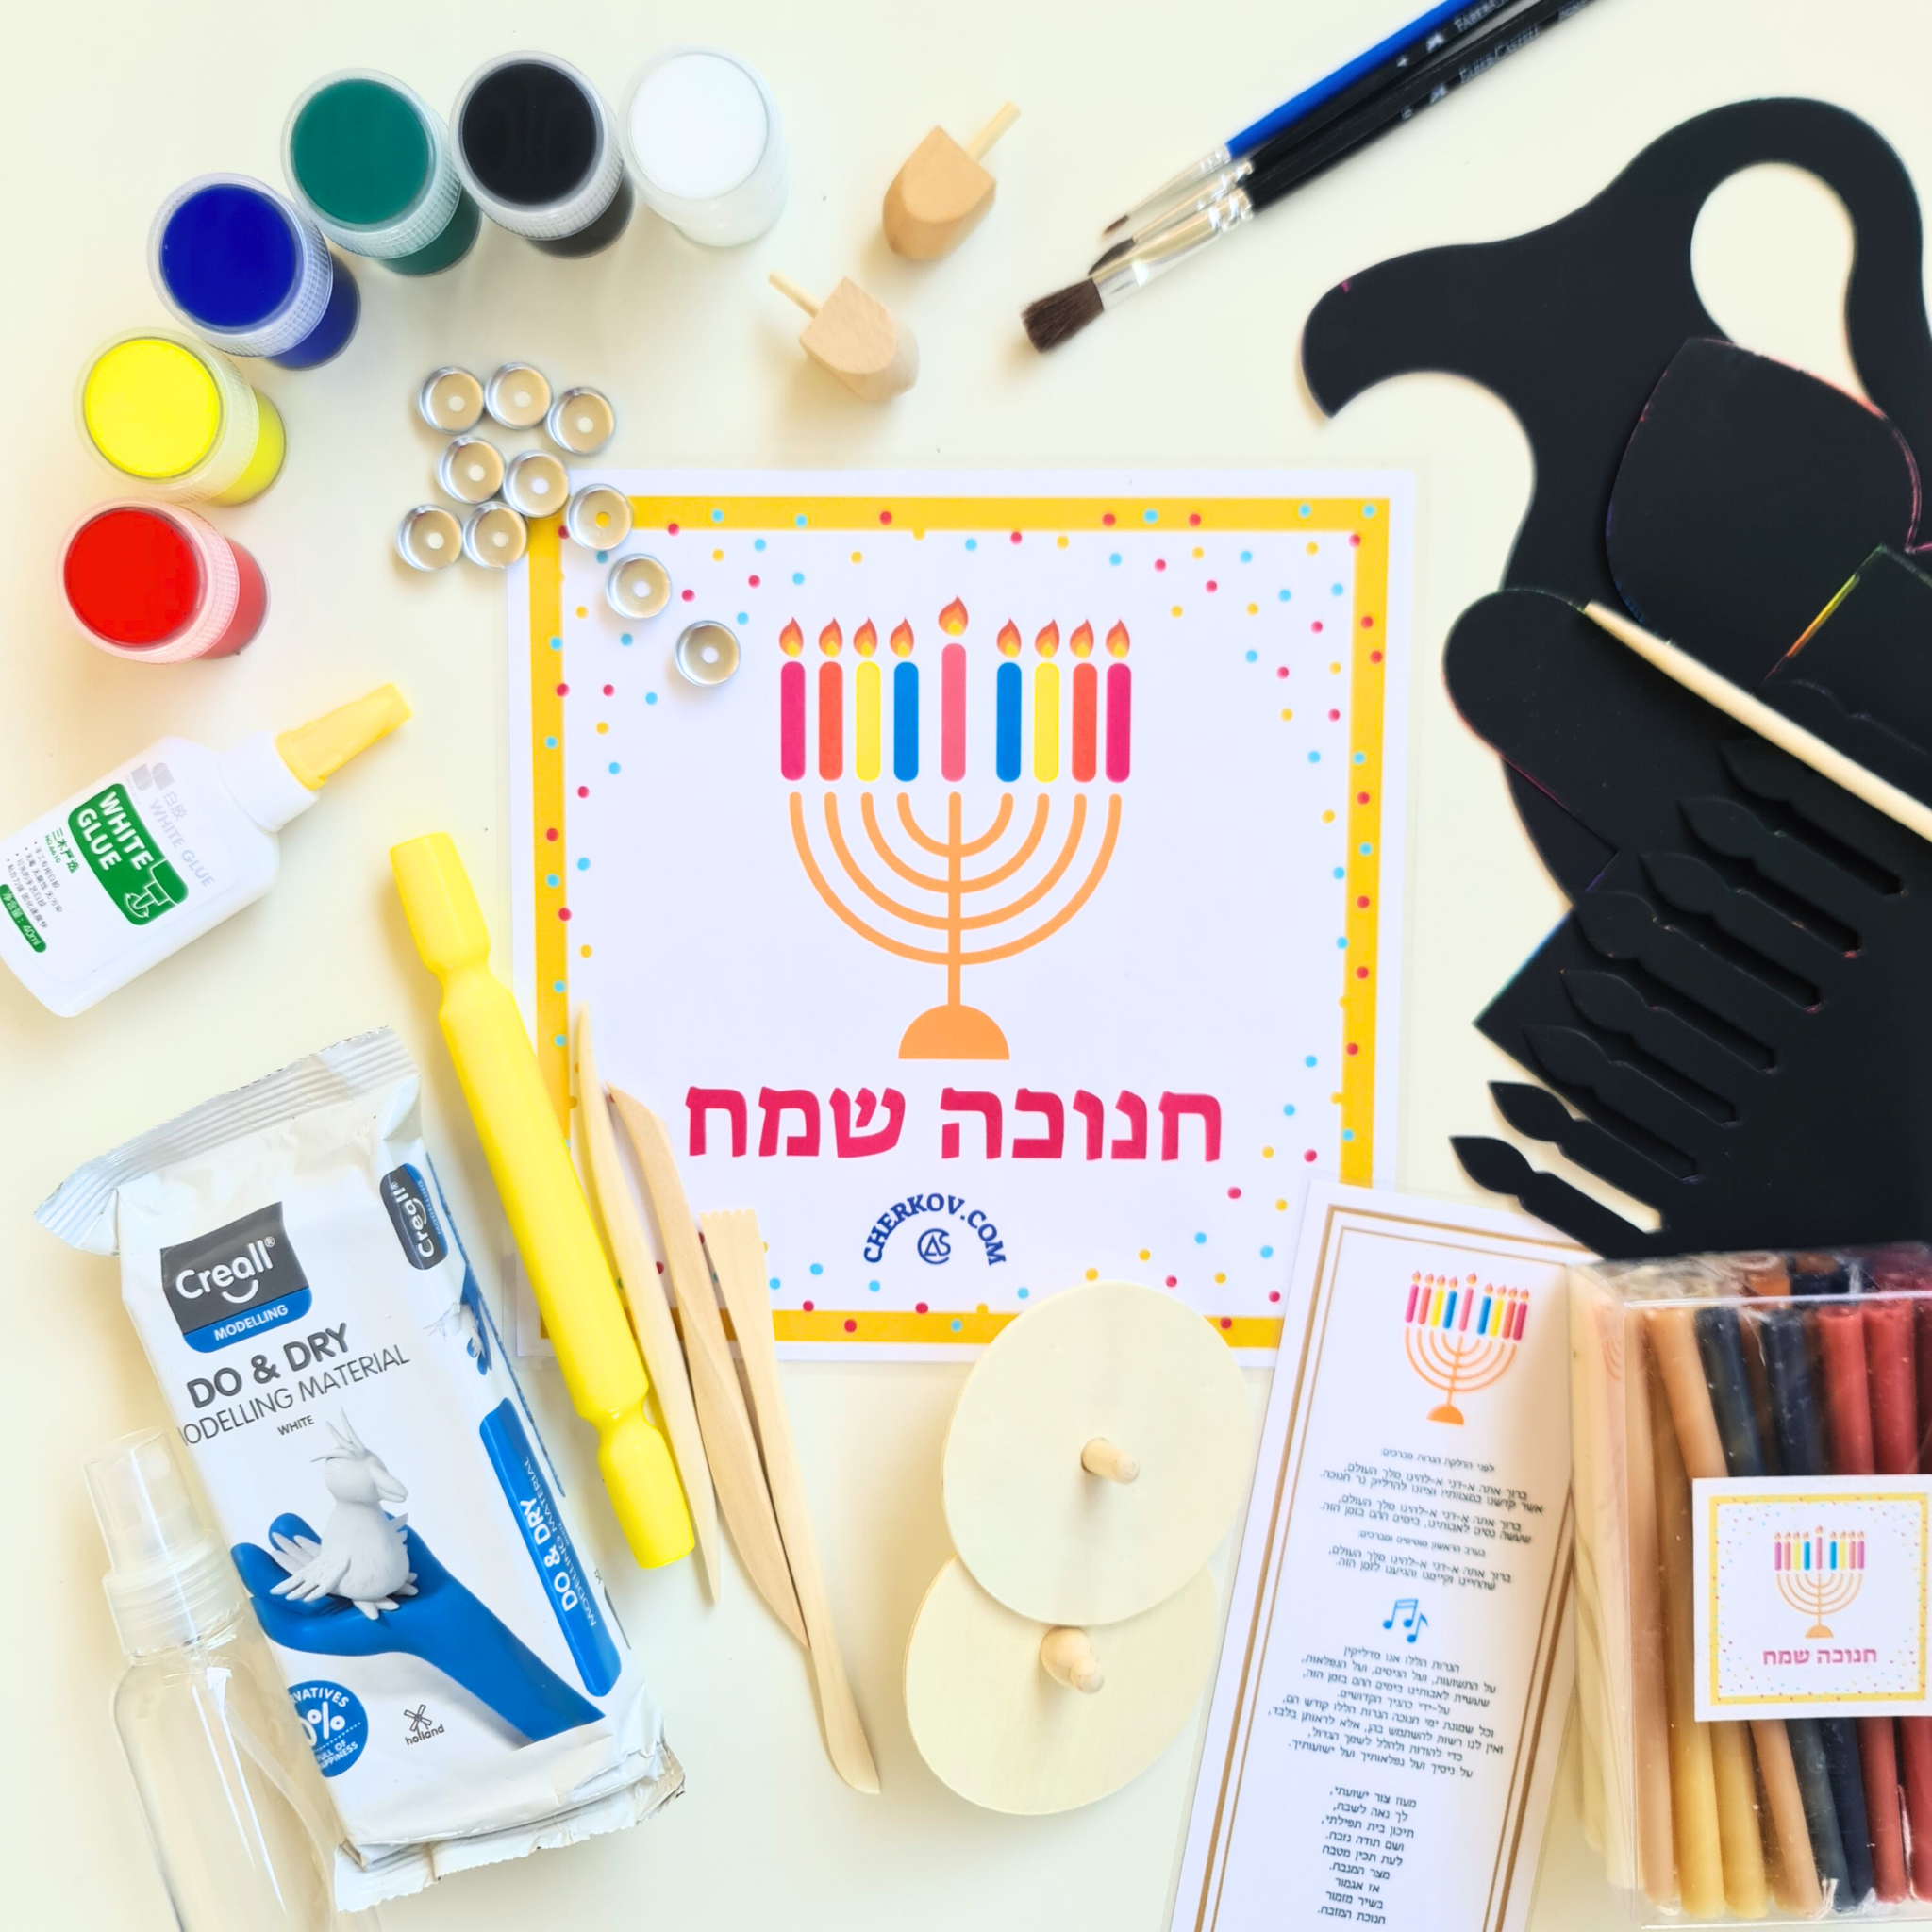 A festive creation kit for Hanukkah